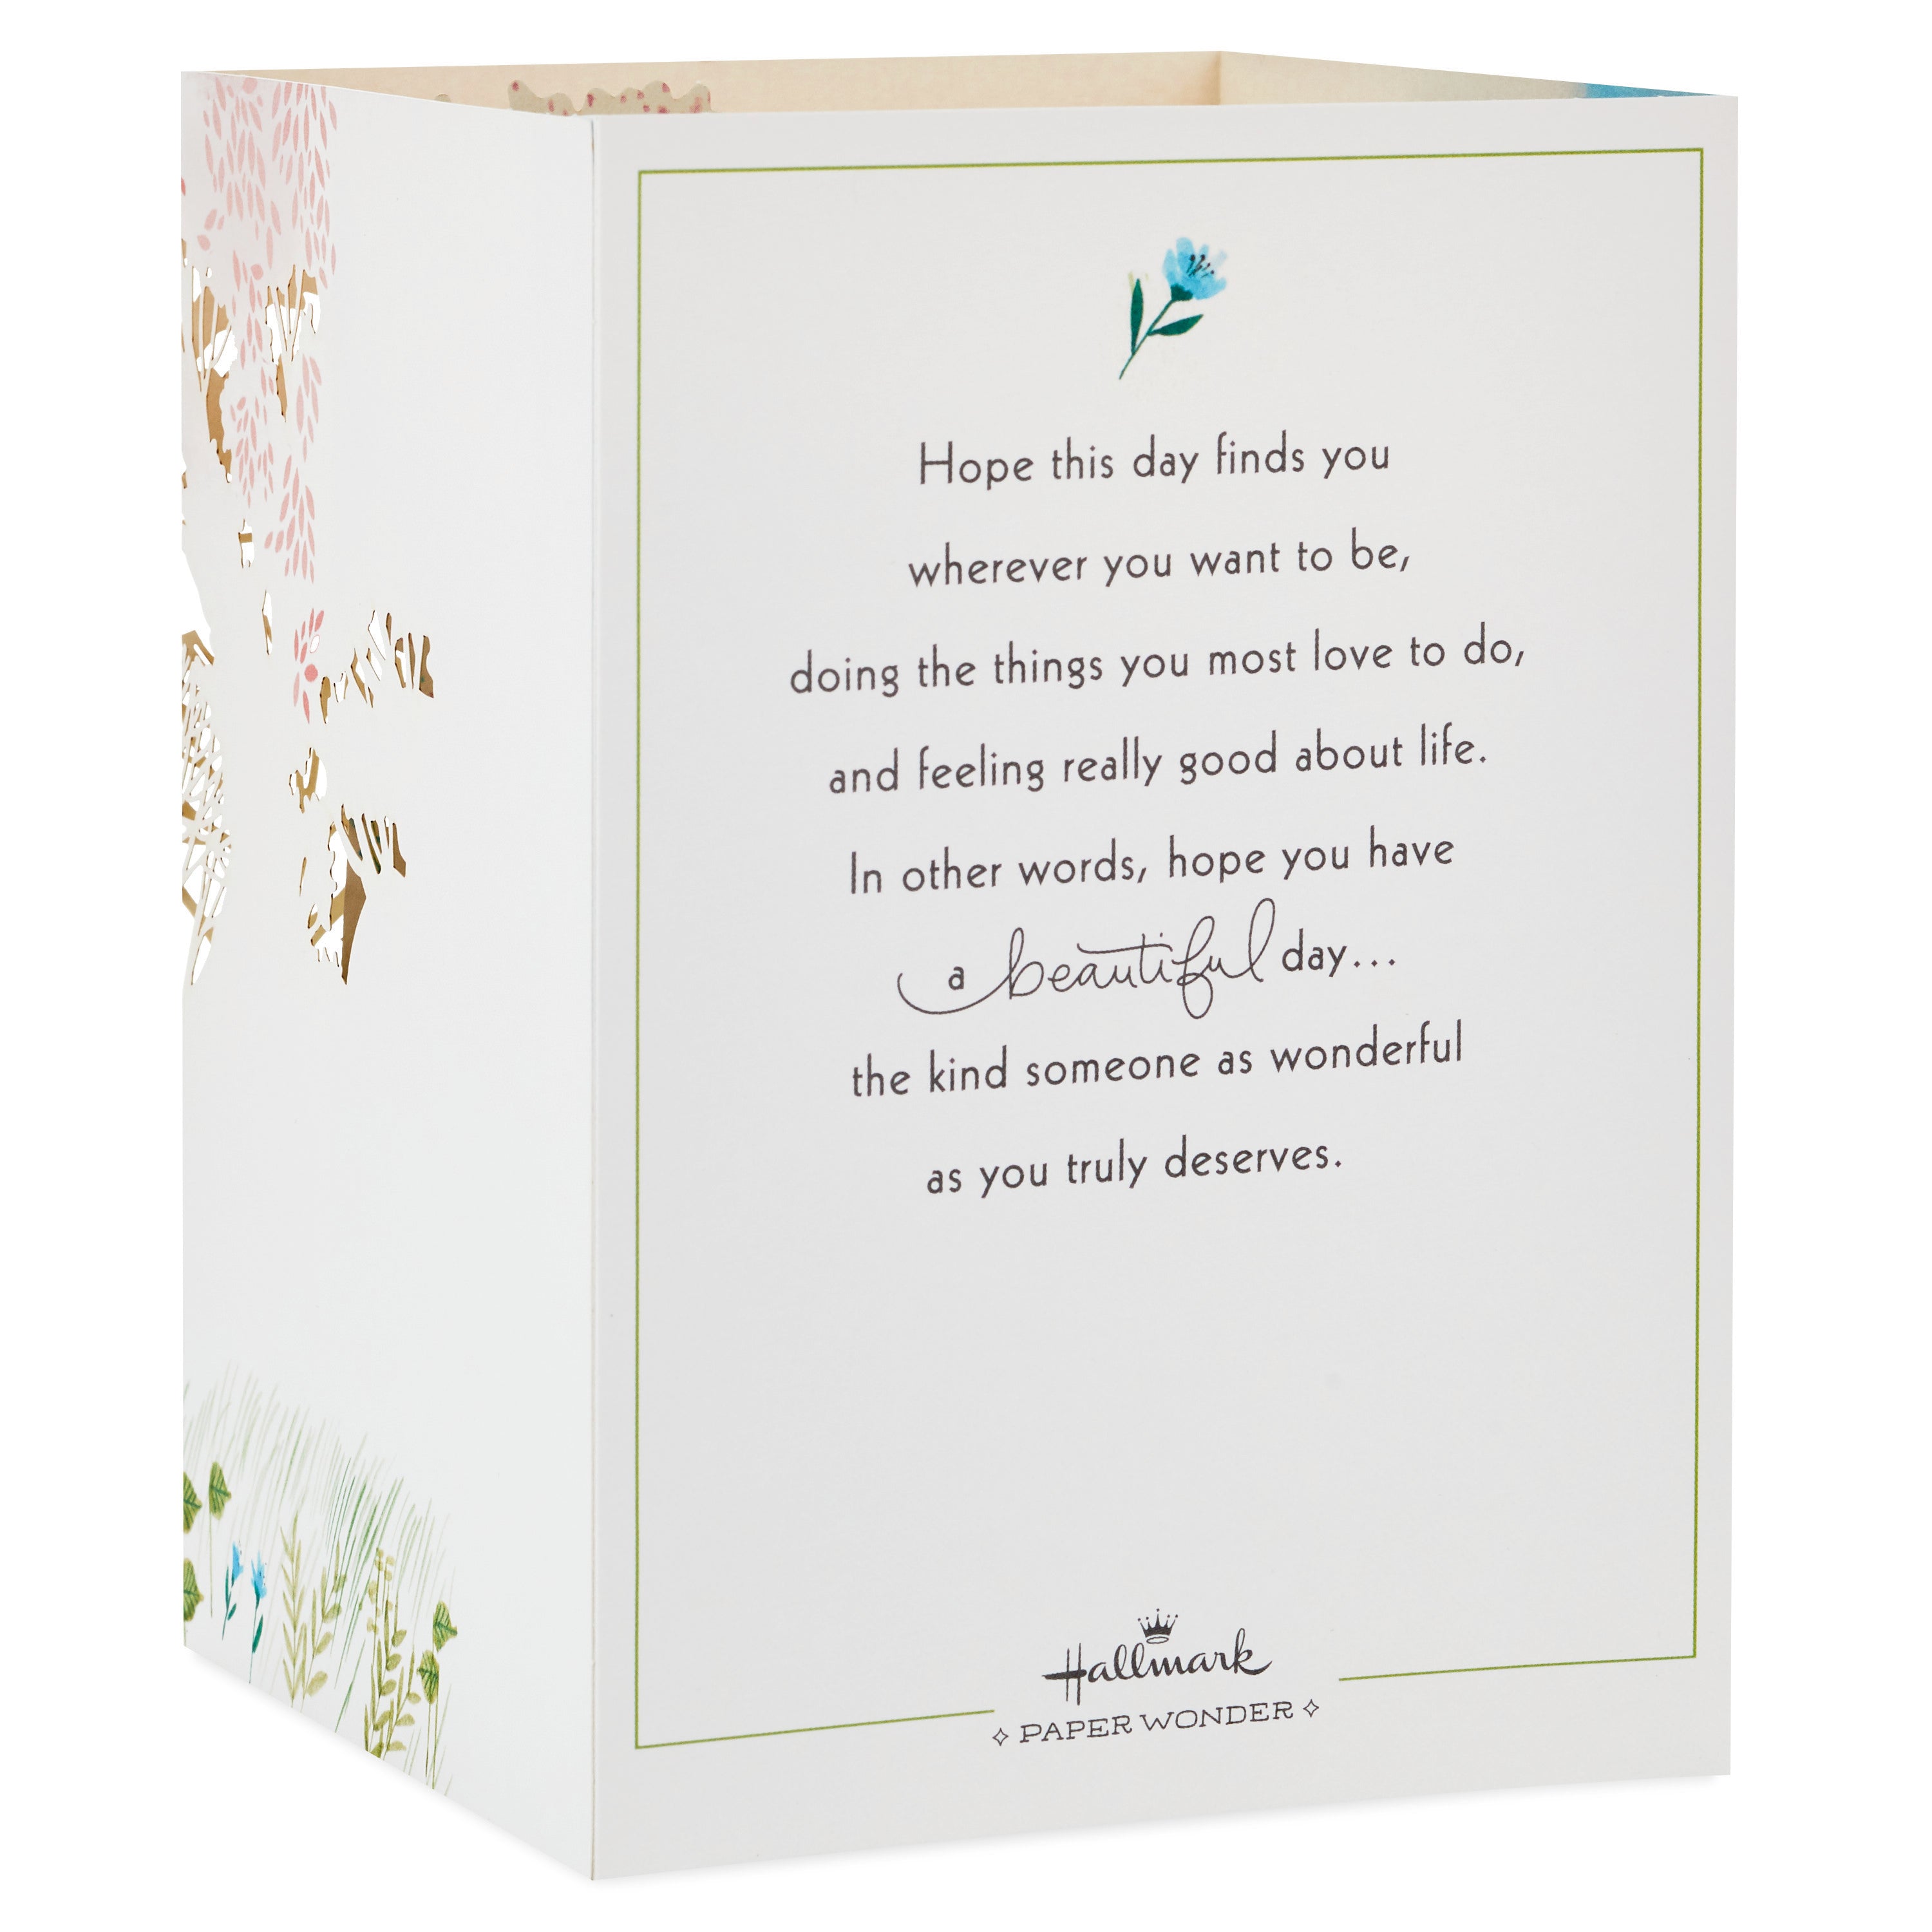 Hallmark Paper Wonder Displayable Pop Up Birthday Card for Women (Beautiful Day)